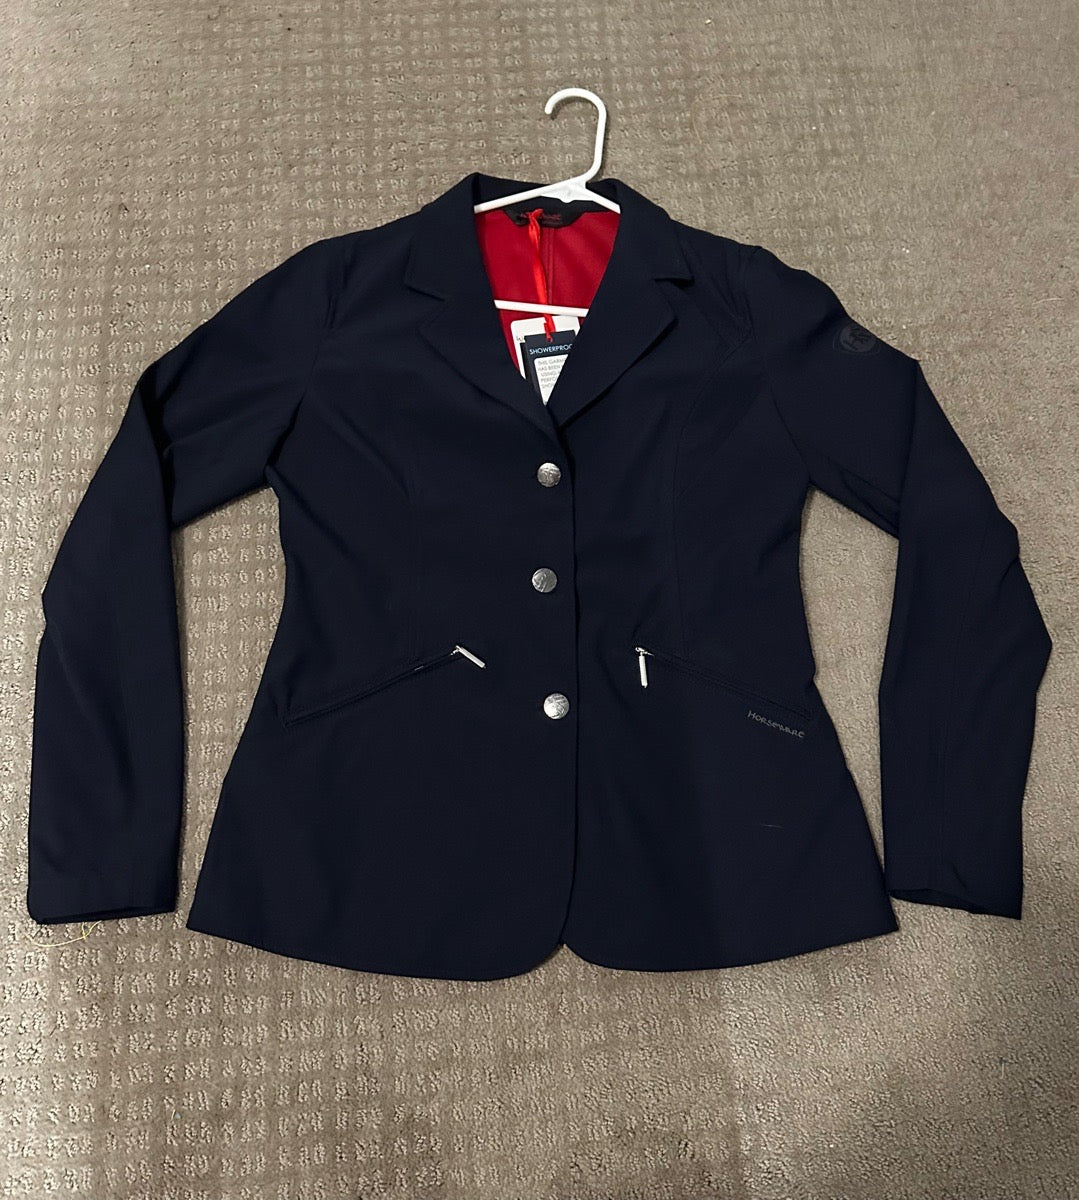 BNWT Horseware Ireland Dark Navy Ladies Competition Jacket Size Medium